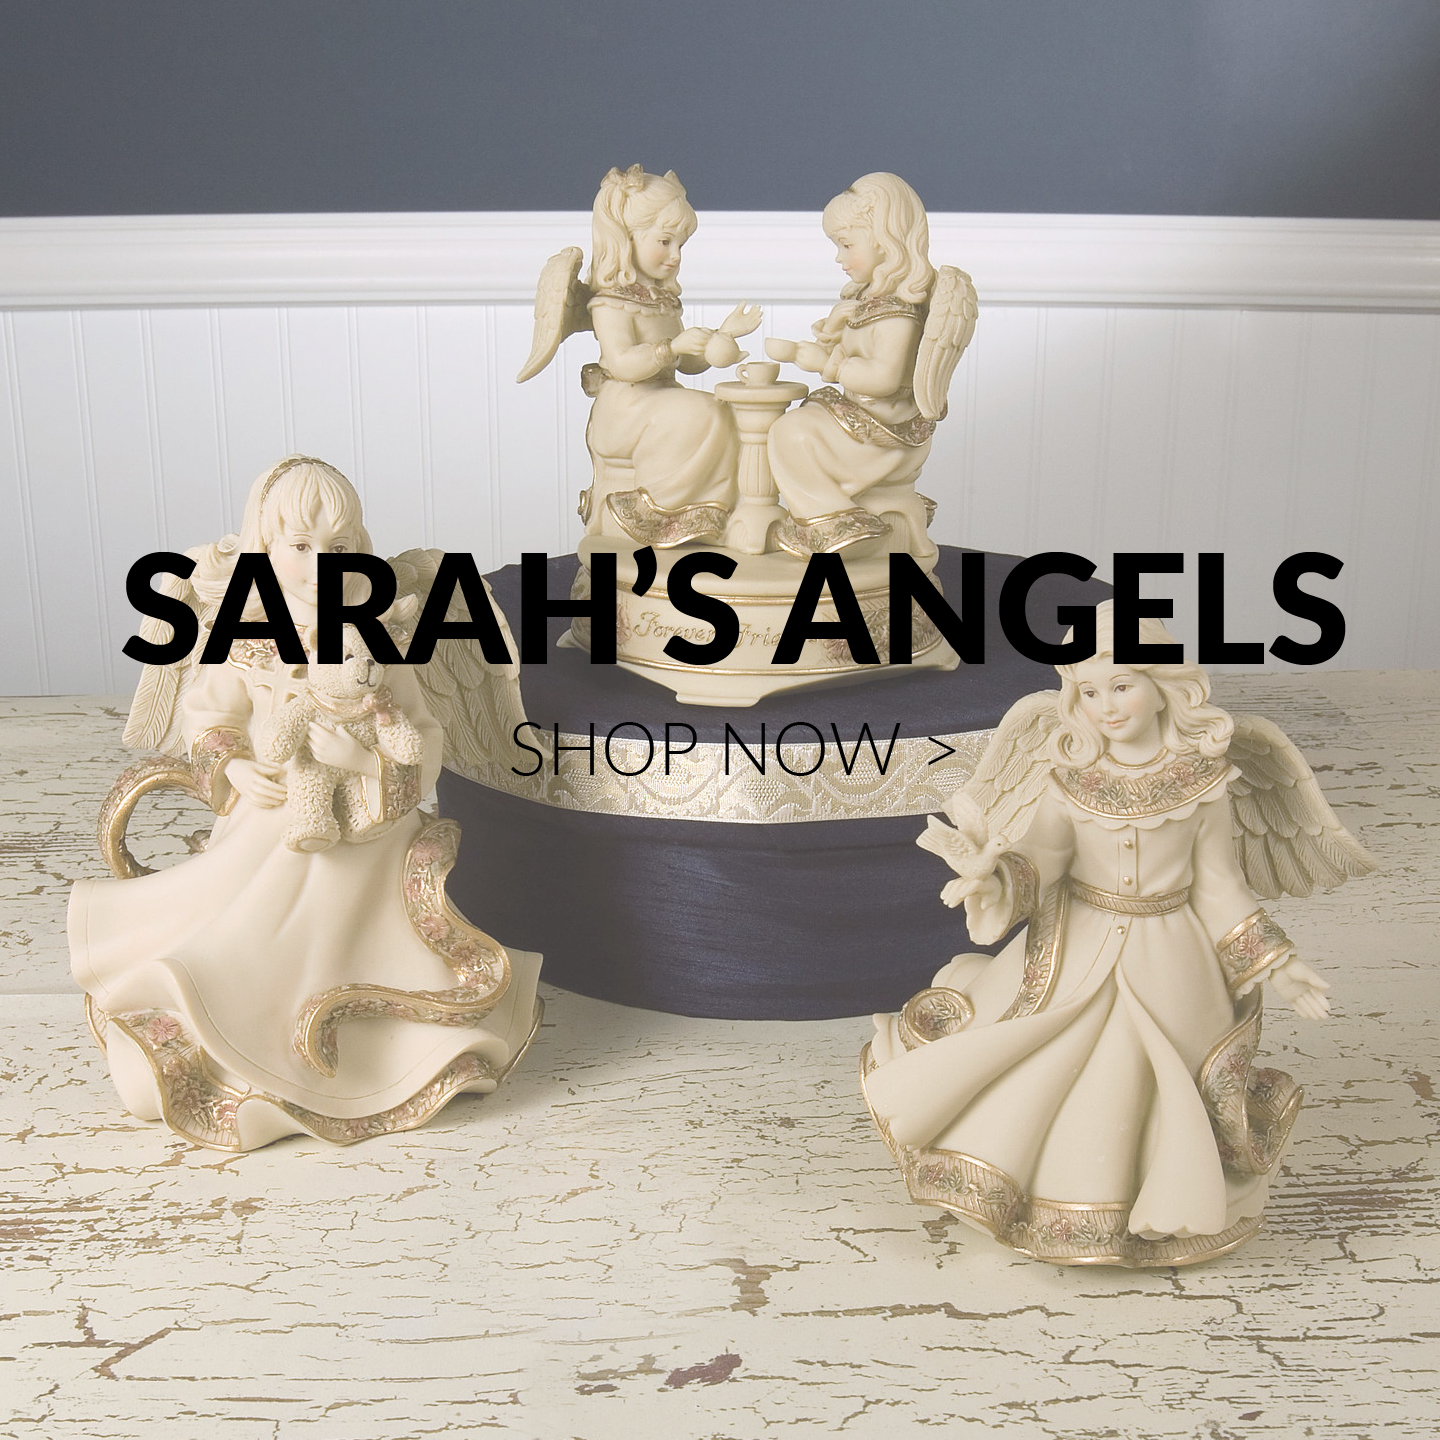 Sarah's Angels